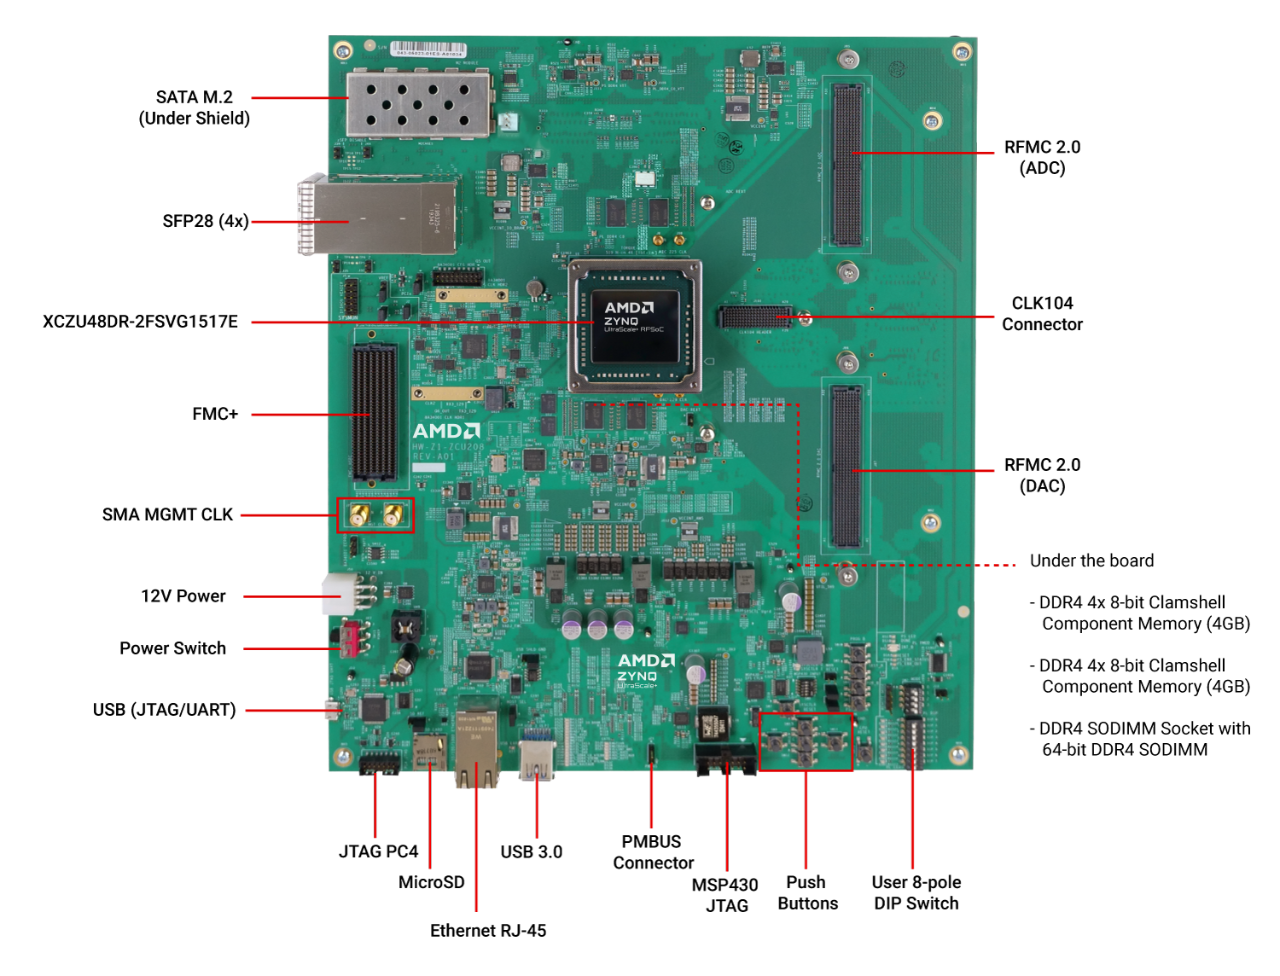 Zynq UltraScale+ RFSoC ZCU208 ES1 评估套件电路板标注